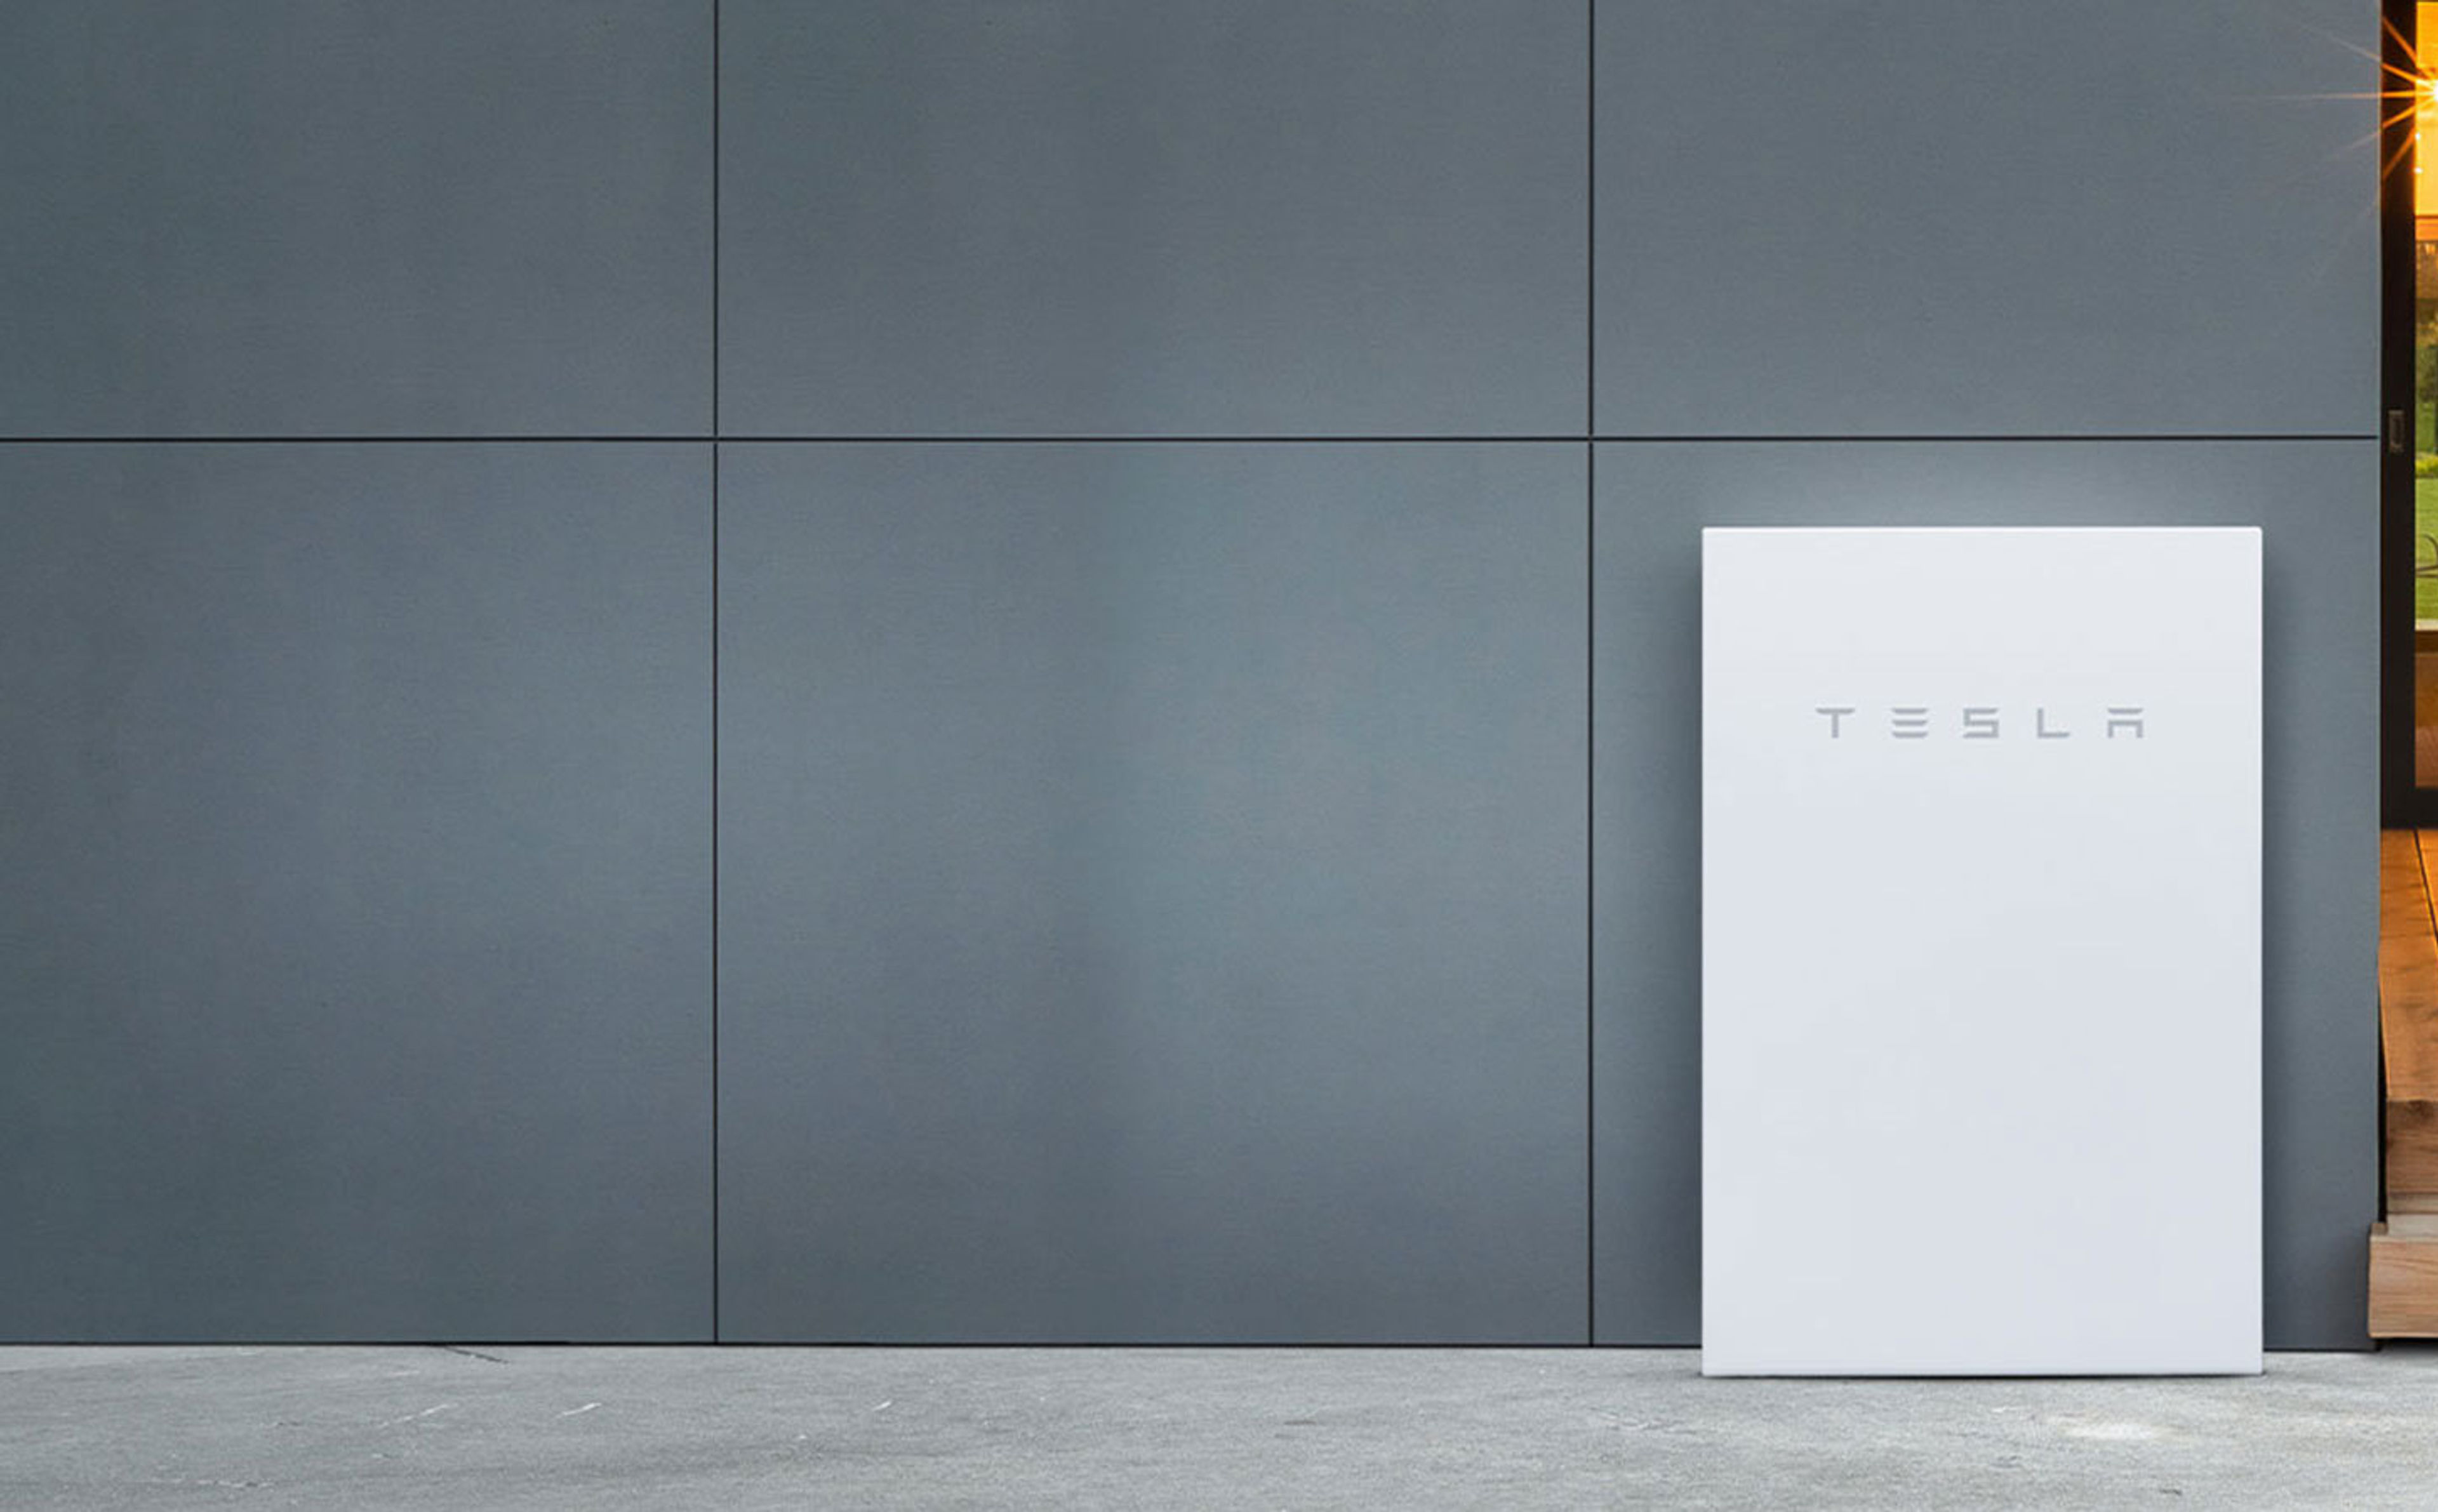 Tesla Battery storage